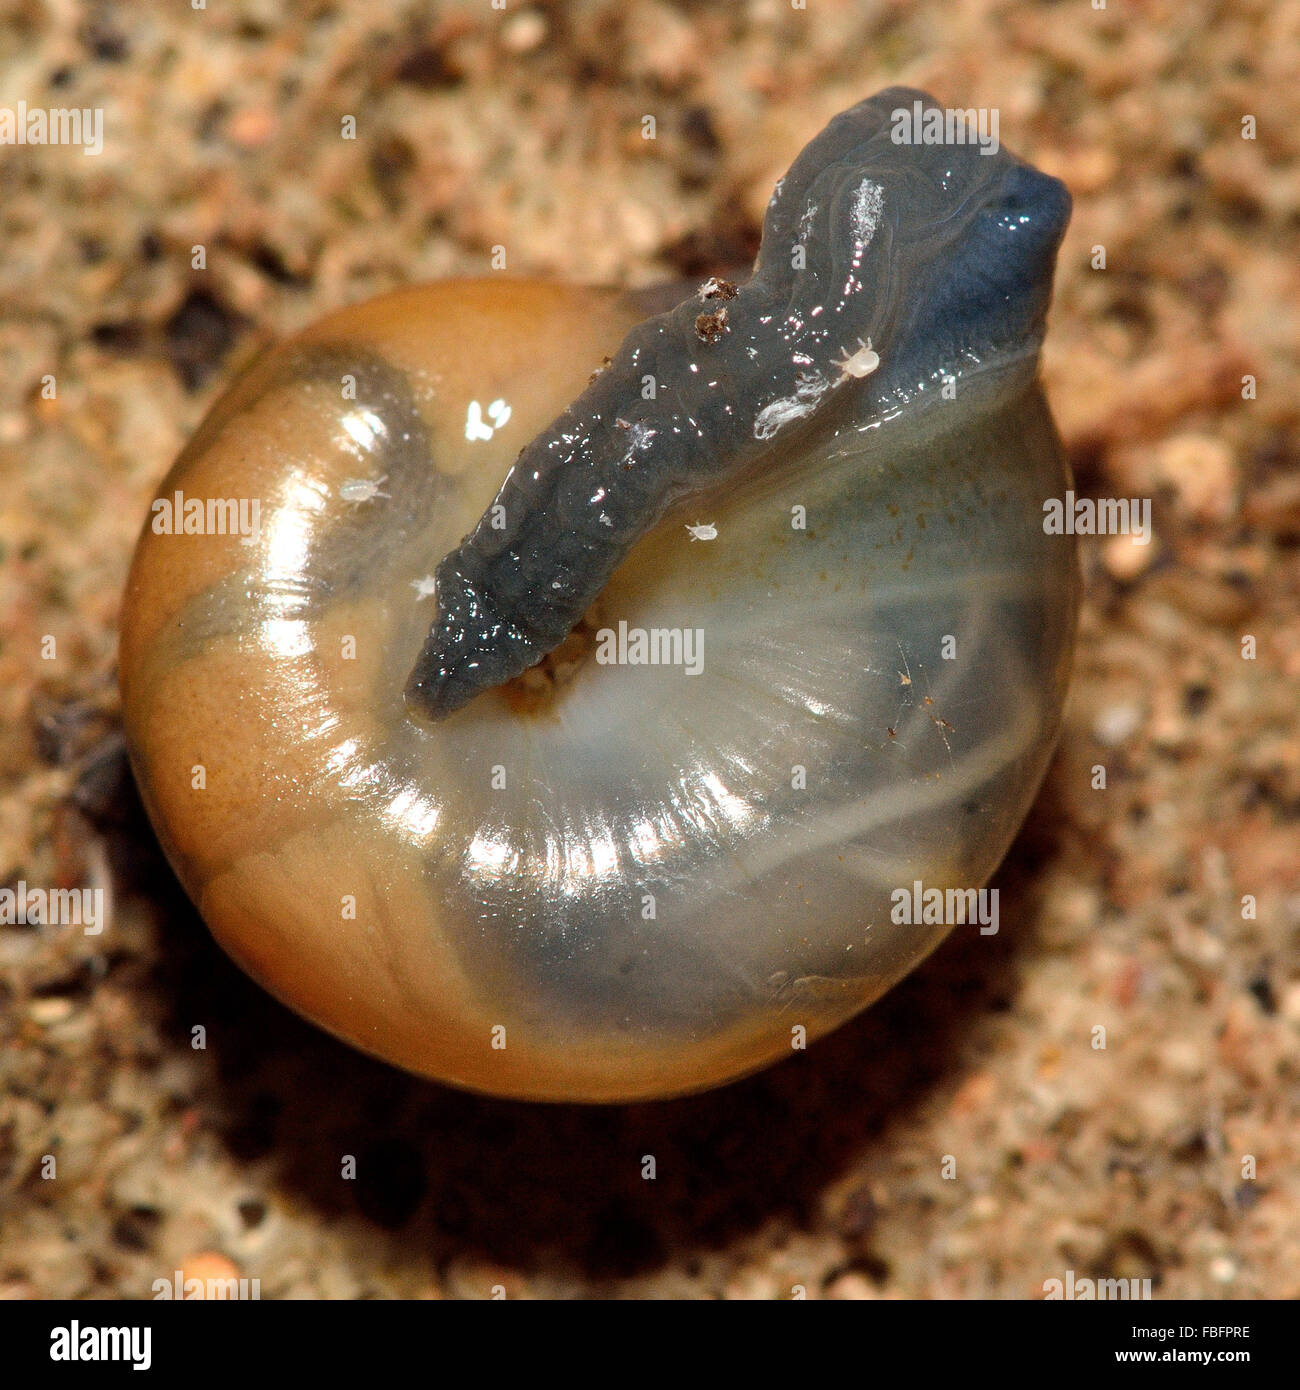 Slug mites (Riccardoella limacum) on garlic snail (Oxychilus alliarius). Tiny parasitic mites are visible on this woodland snail Stock Photo